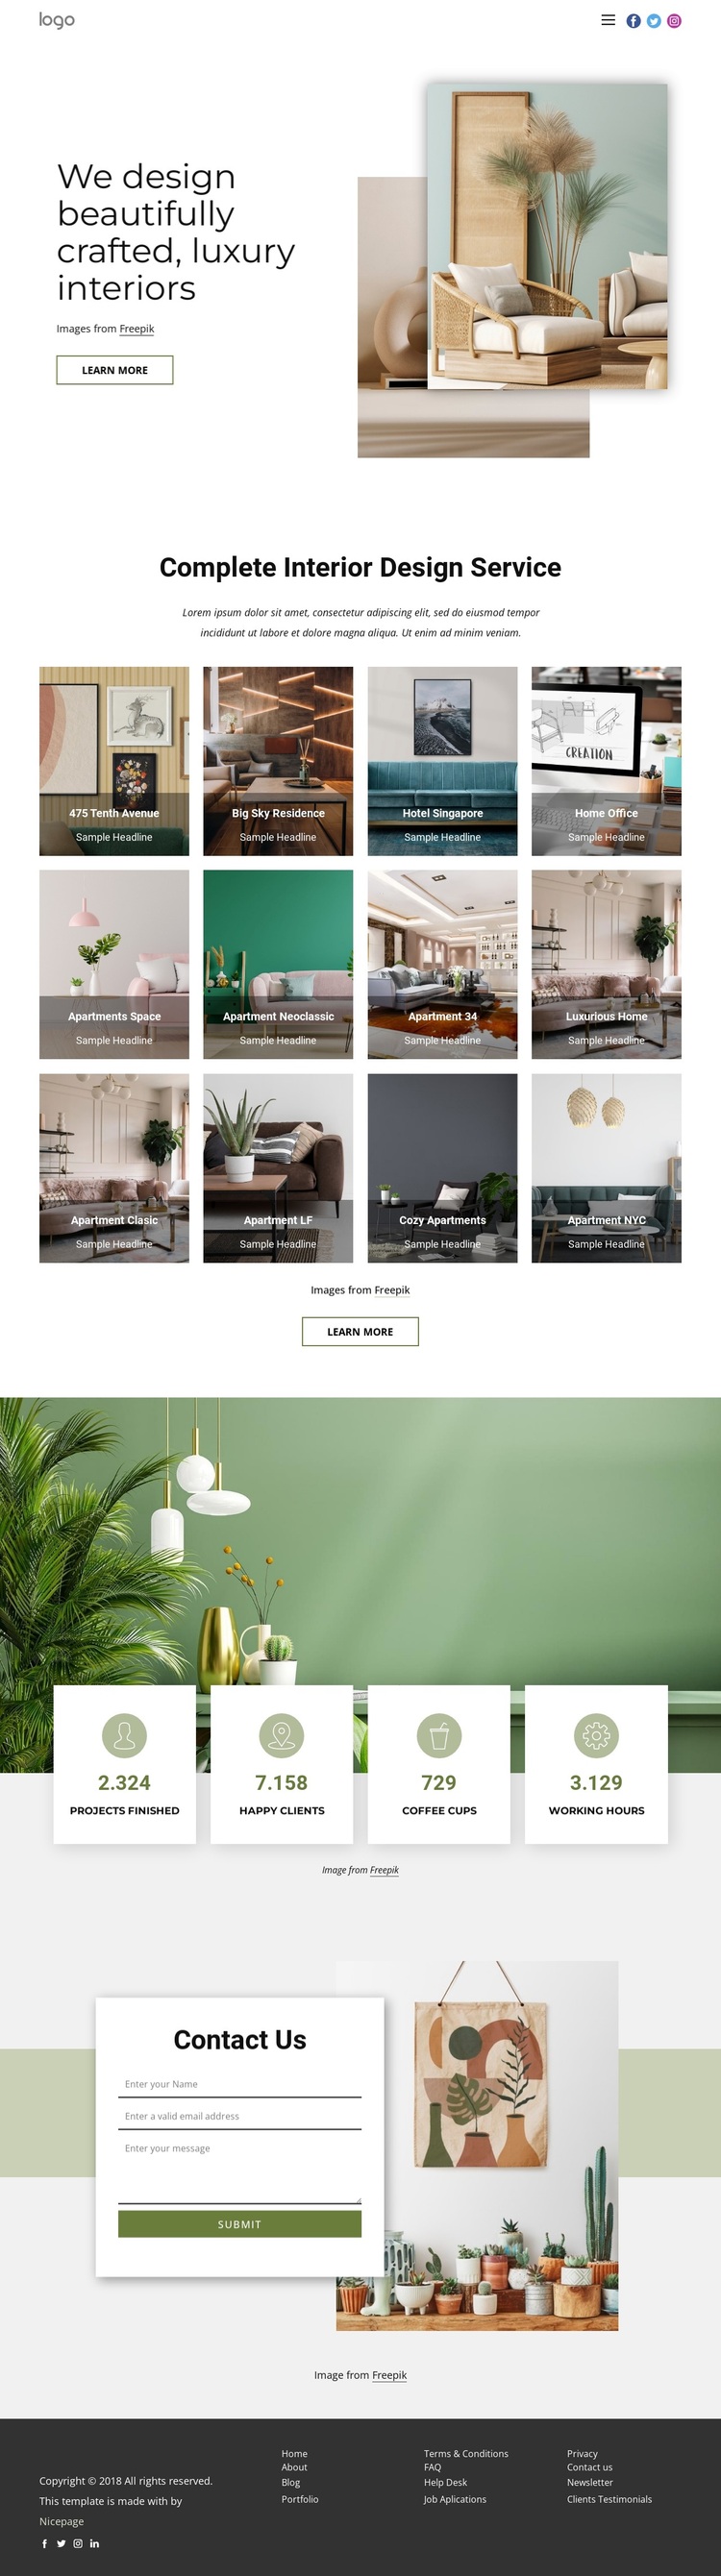 We design luxury interiors Joomla Page Builder